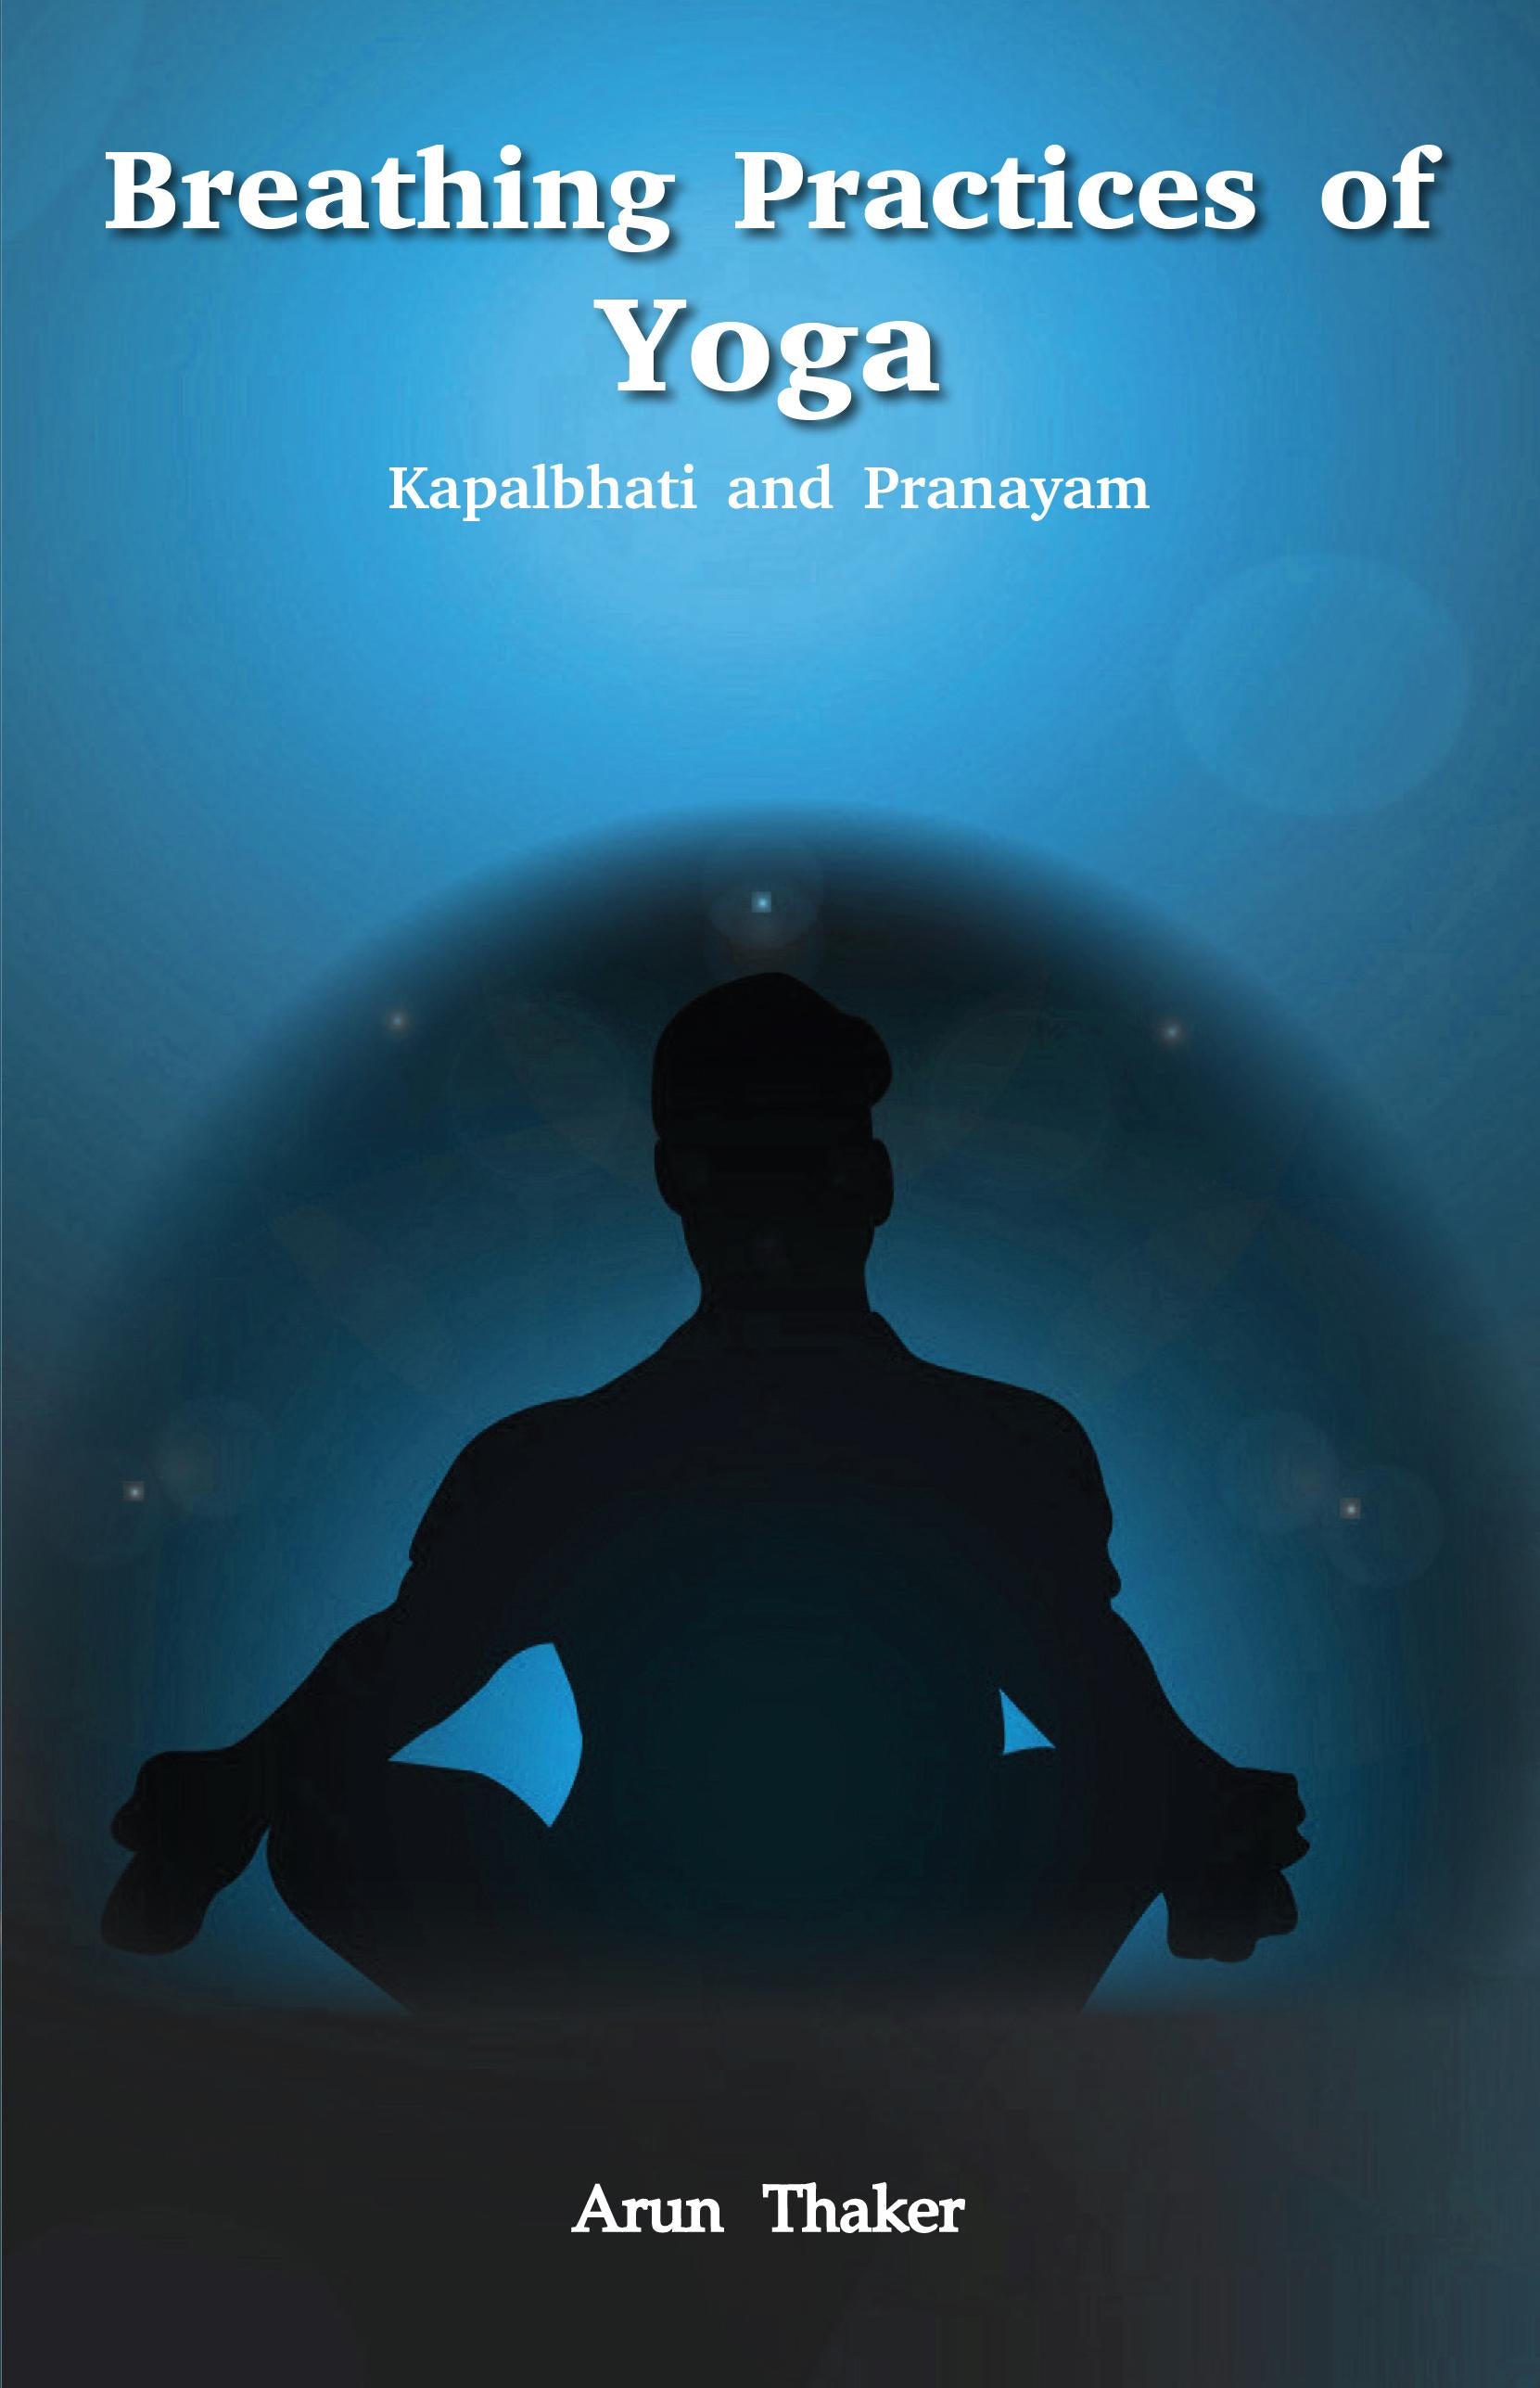 Breathing Practices of Yoga (Kapalbhati ane Prayanam)